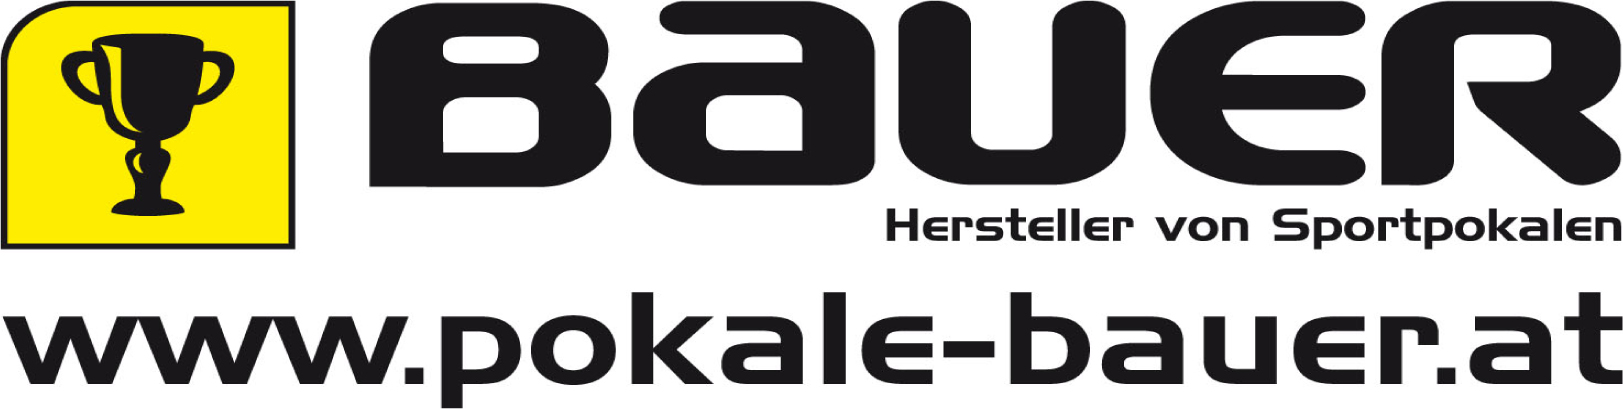 Bauer Pokale Logo